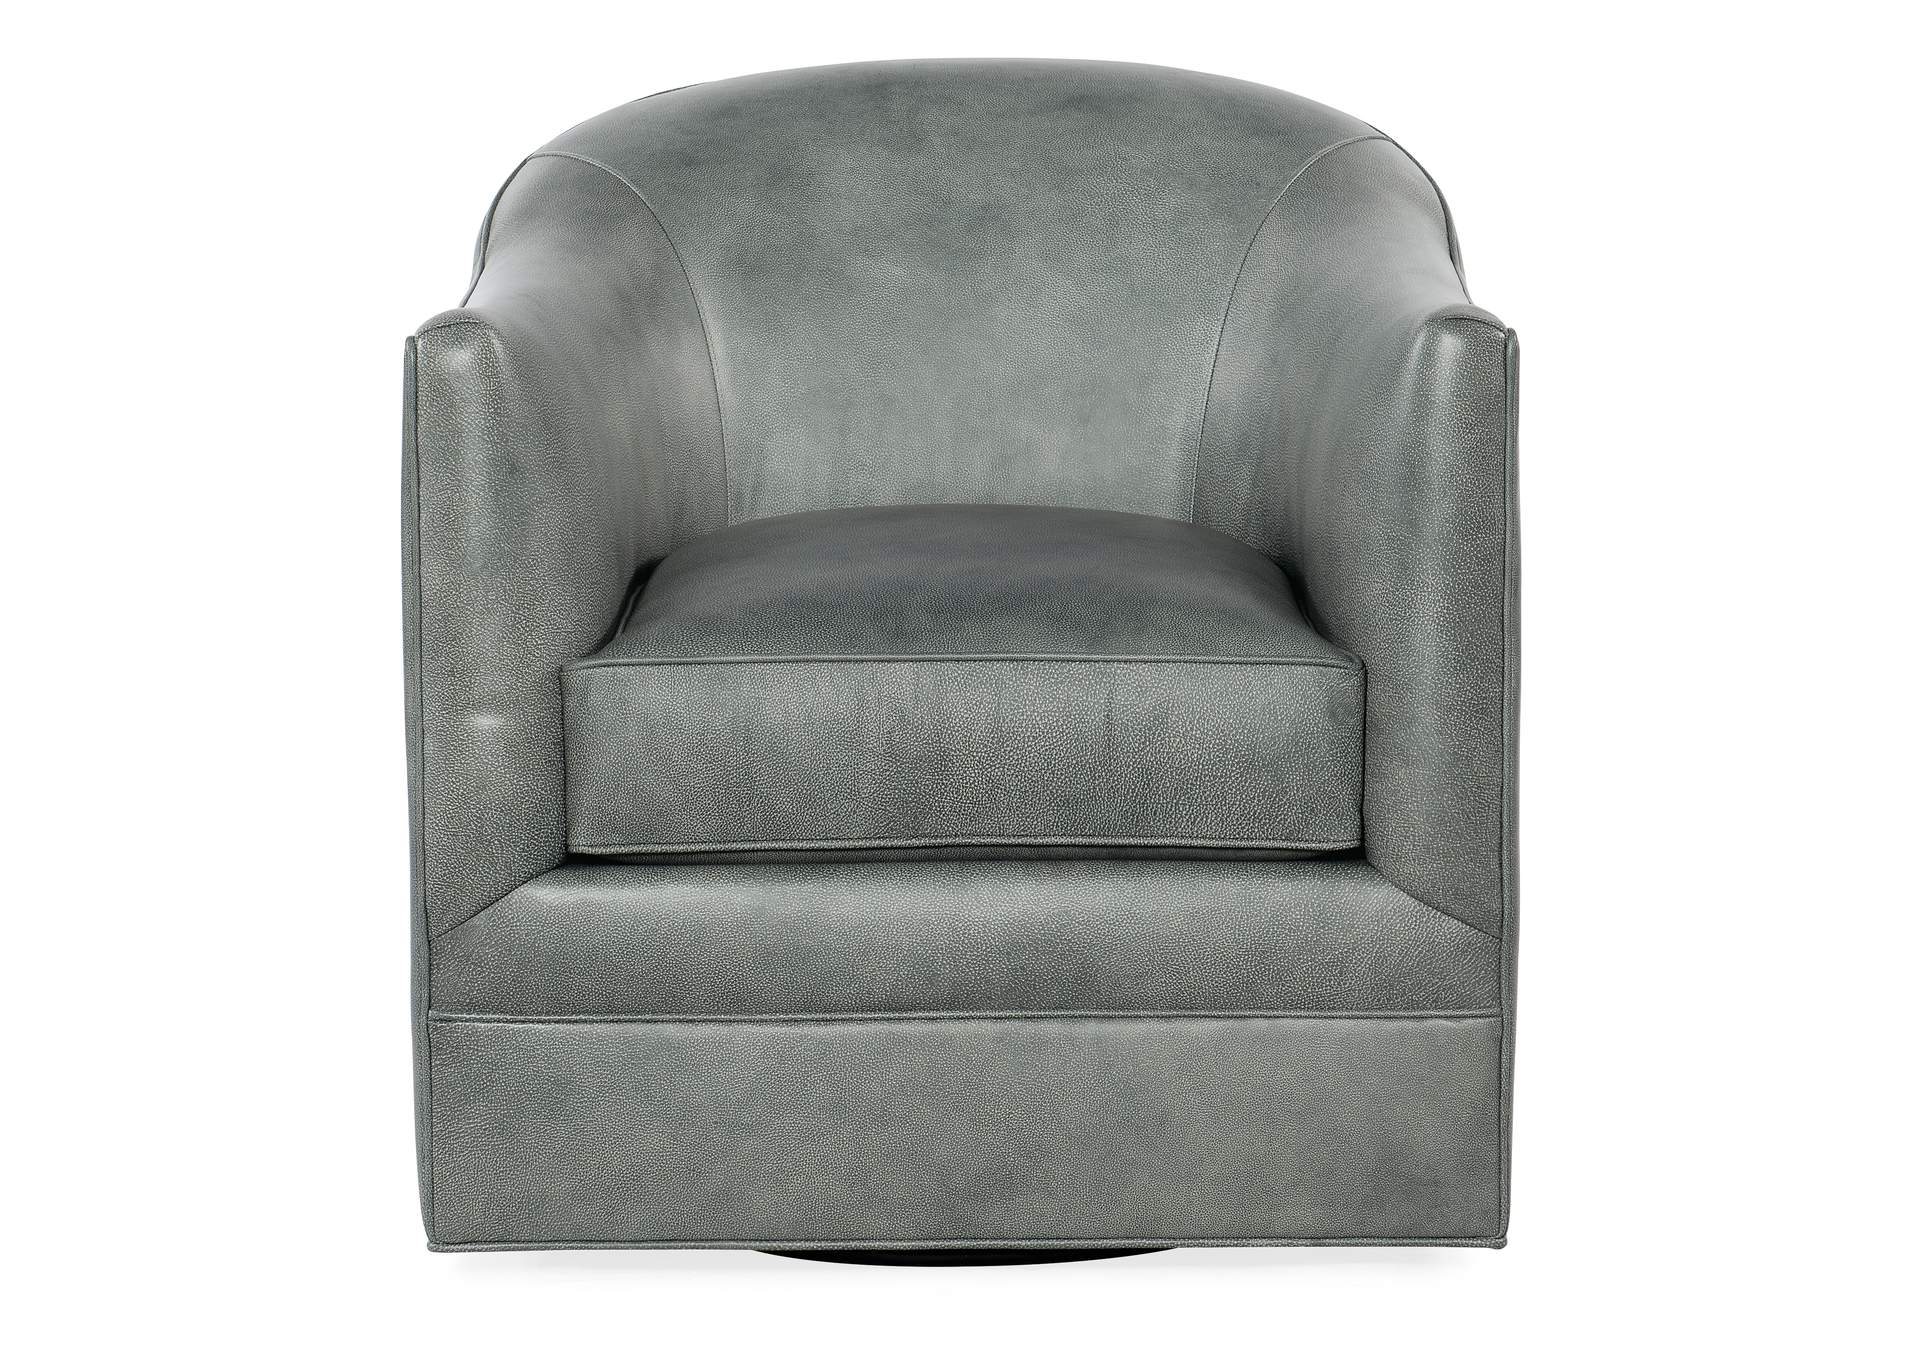 Gideon Swivel Club Chair,Hooker Furniture